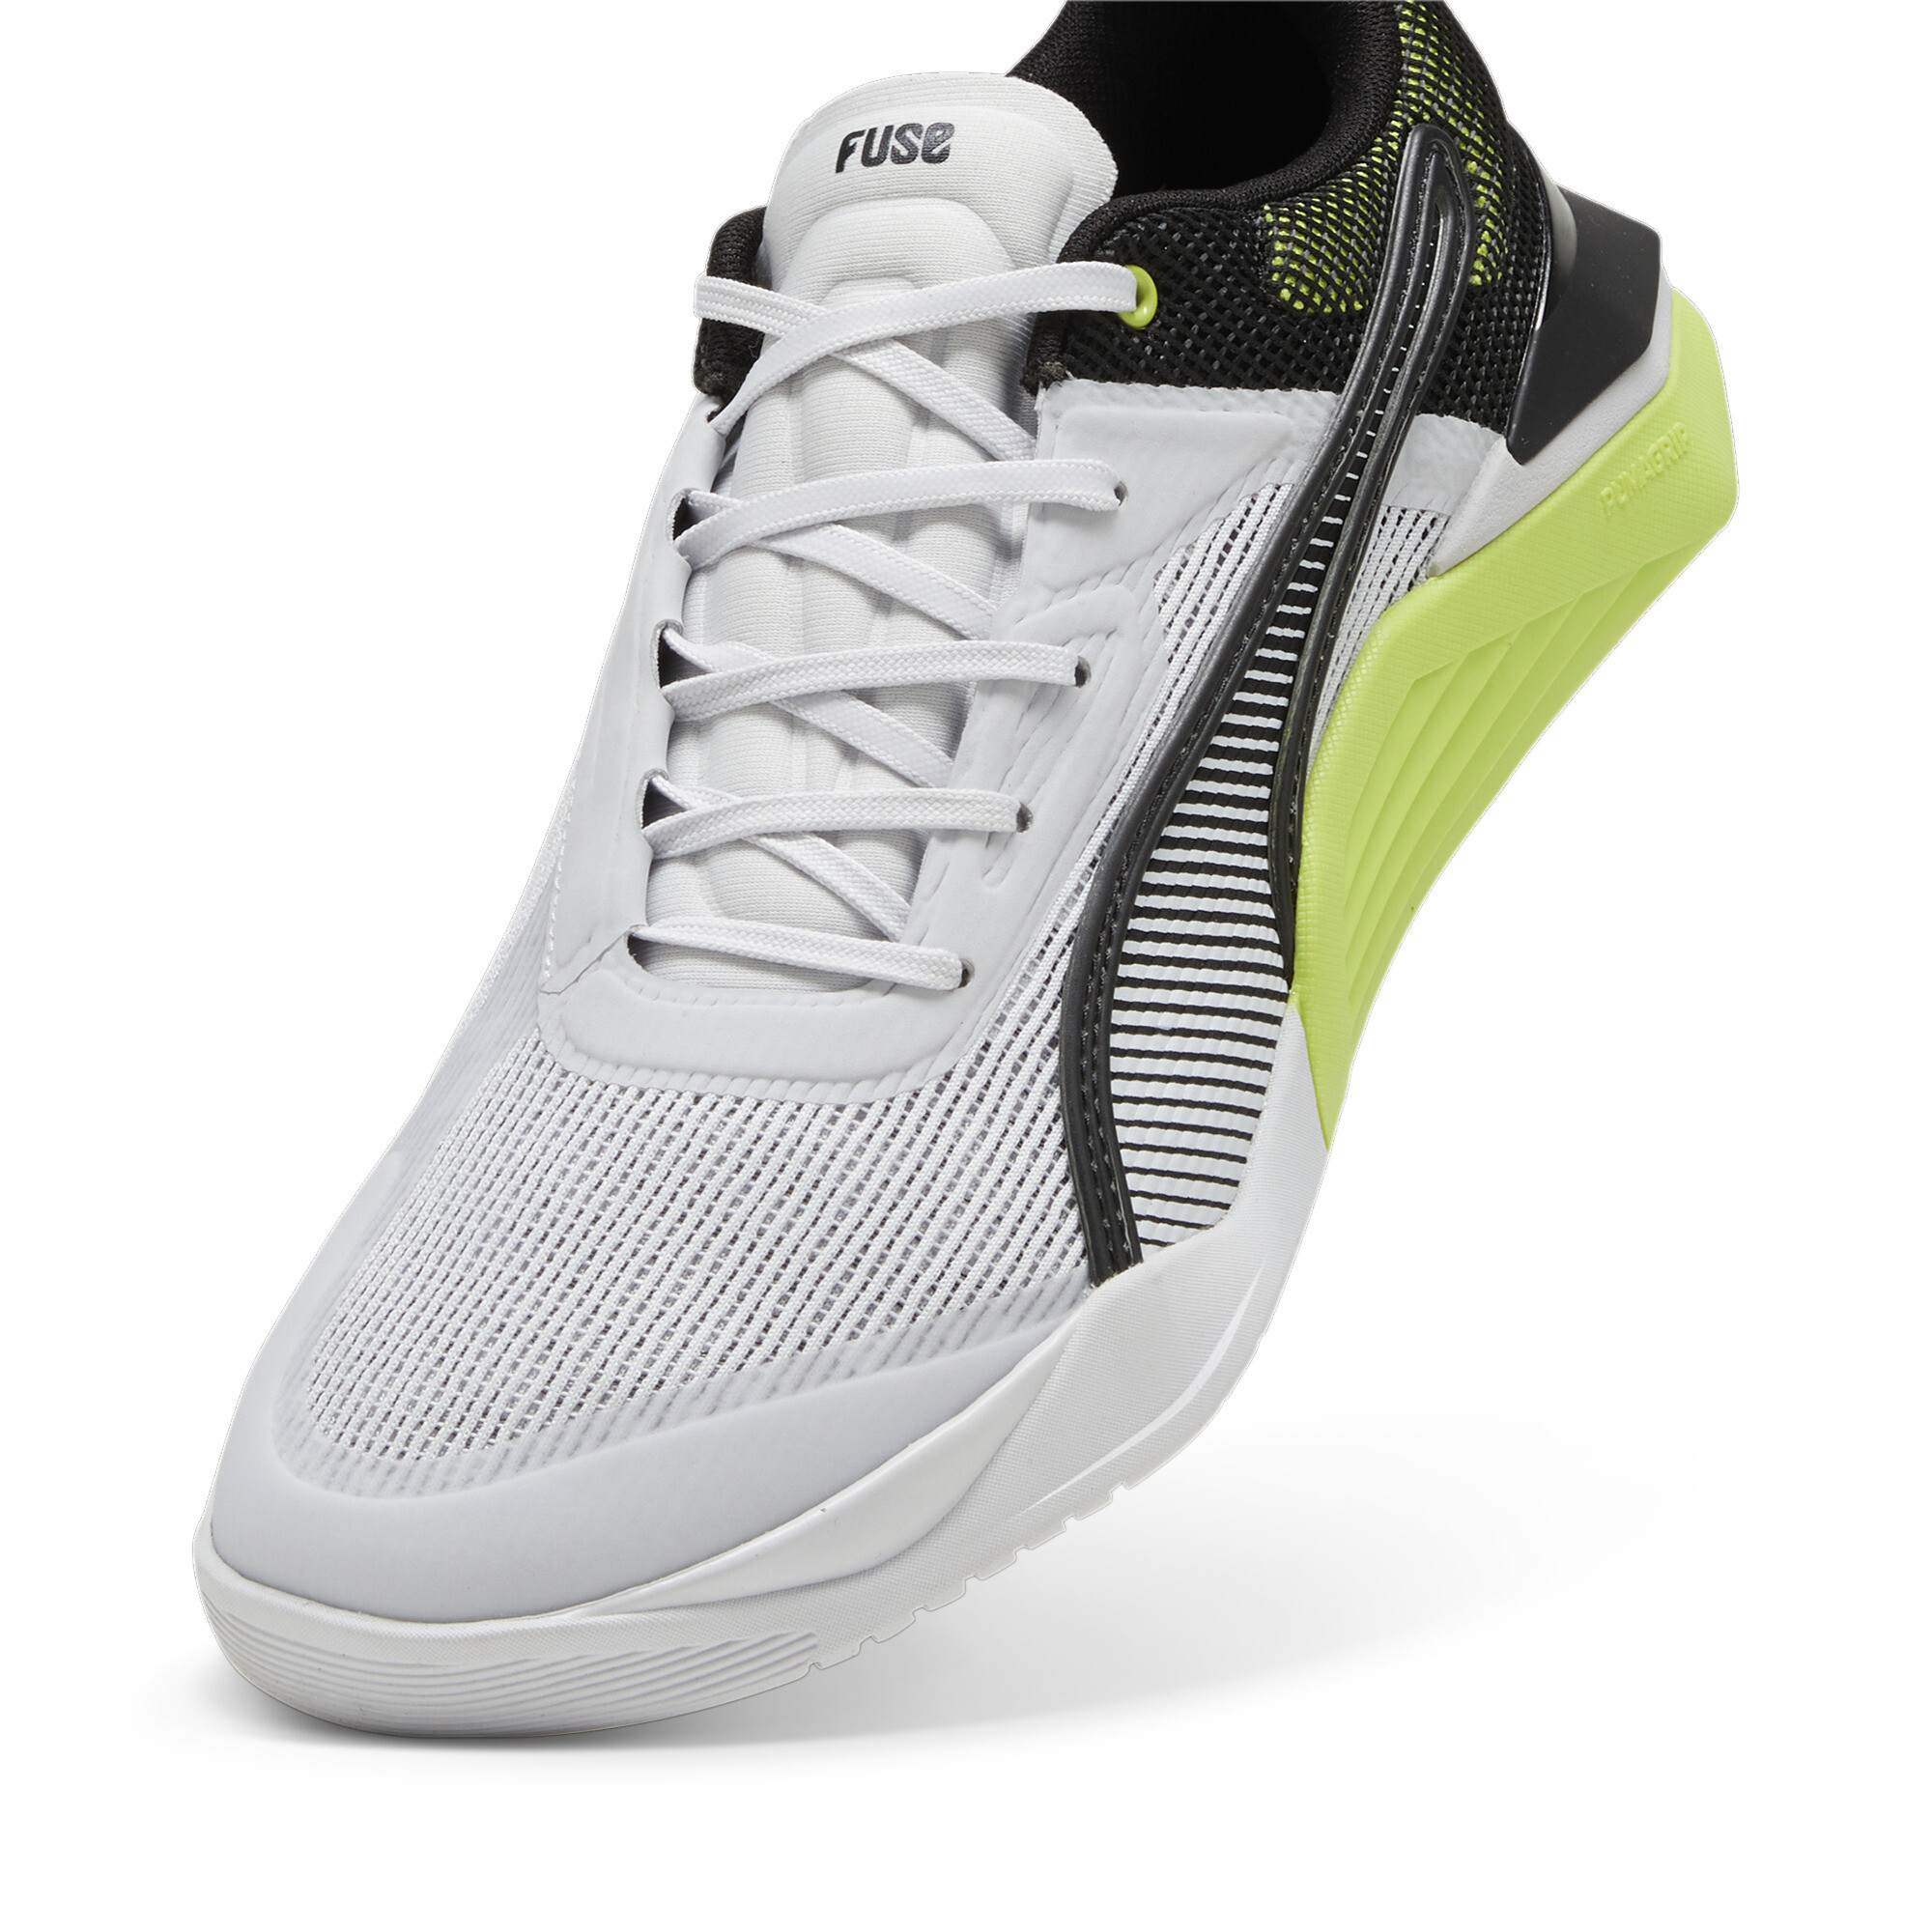 Men's PUMA Fuse 3.0 Training Shoes In Gray, Size EU 47